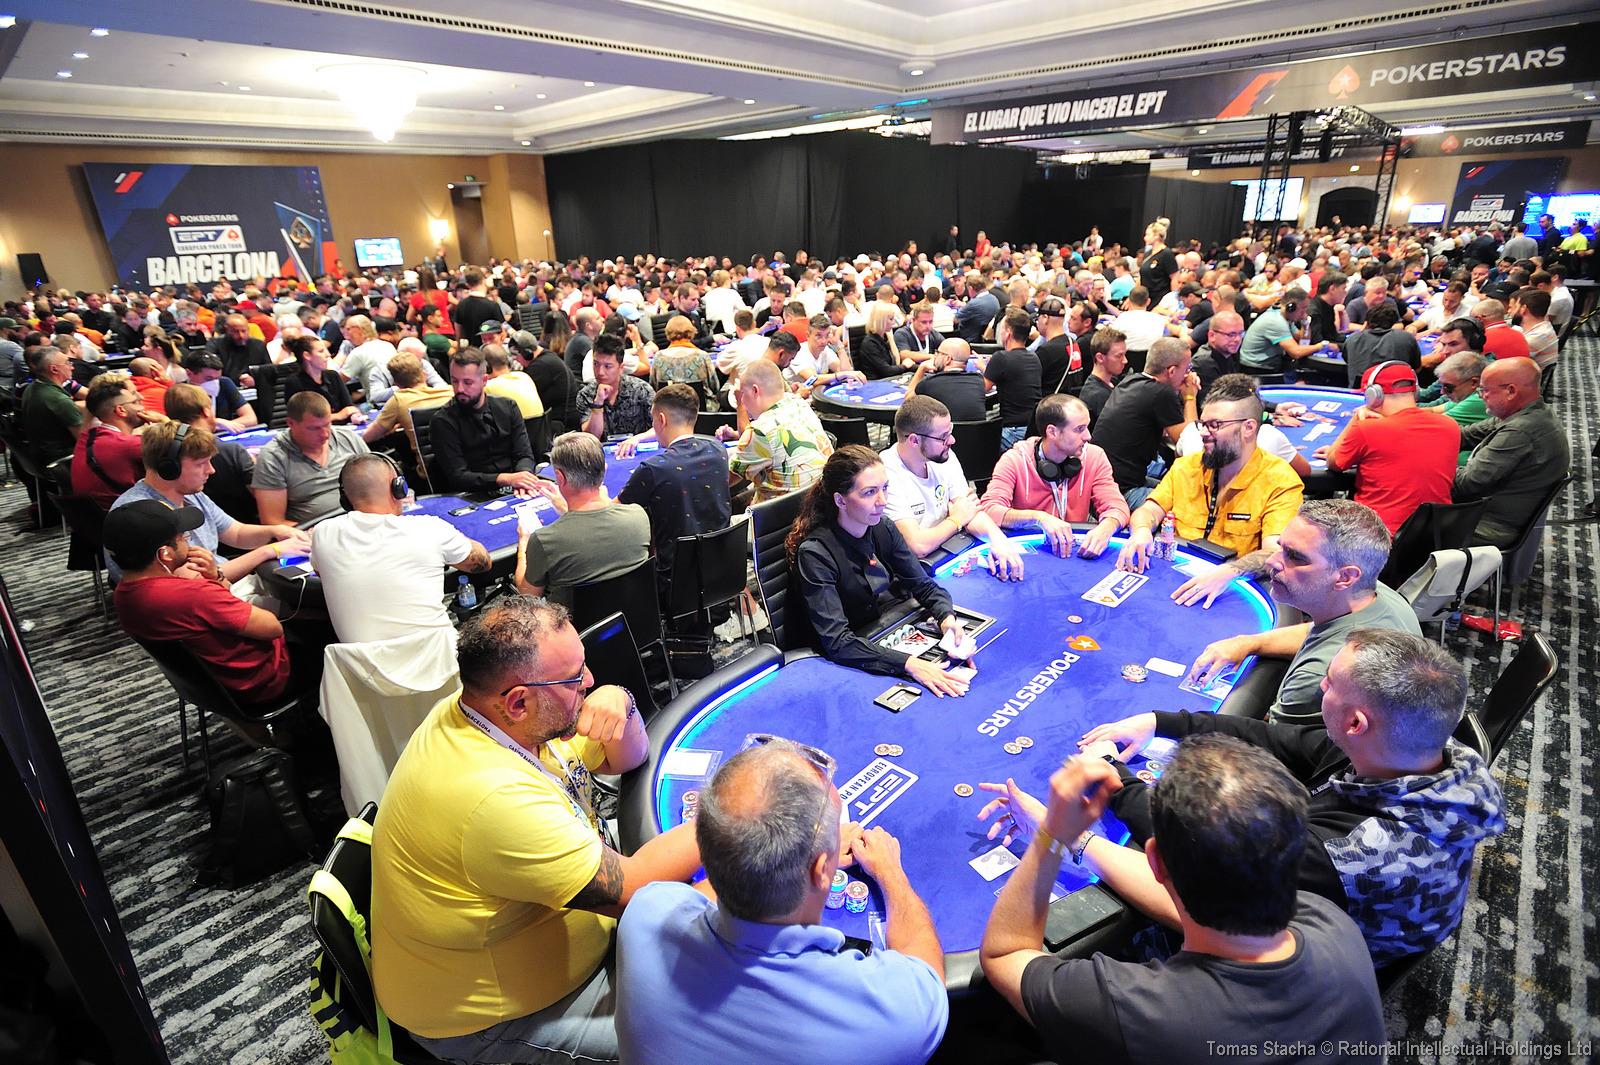 Casino Barcelona acoge el PokerStars European Poker Tour más grande de la historia